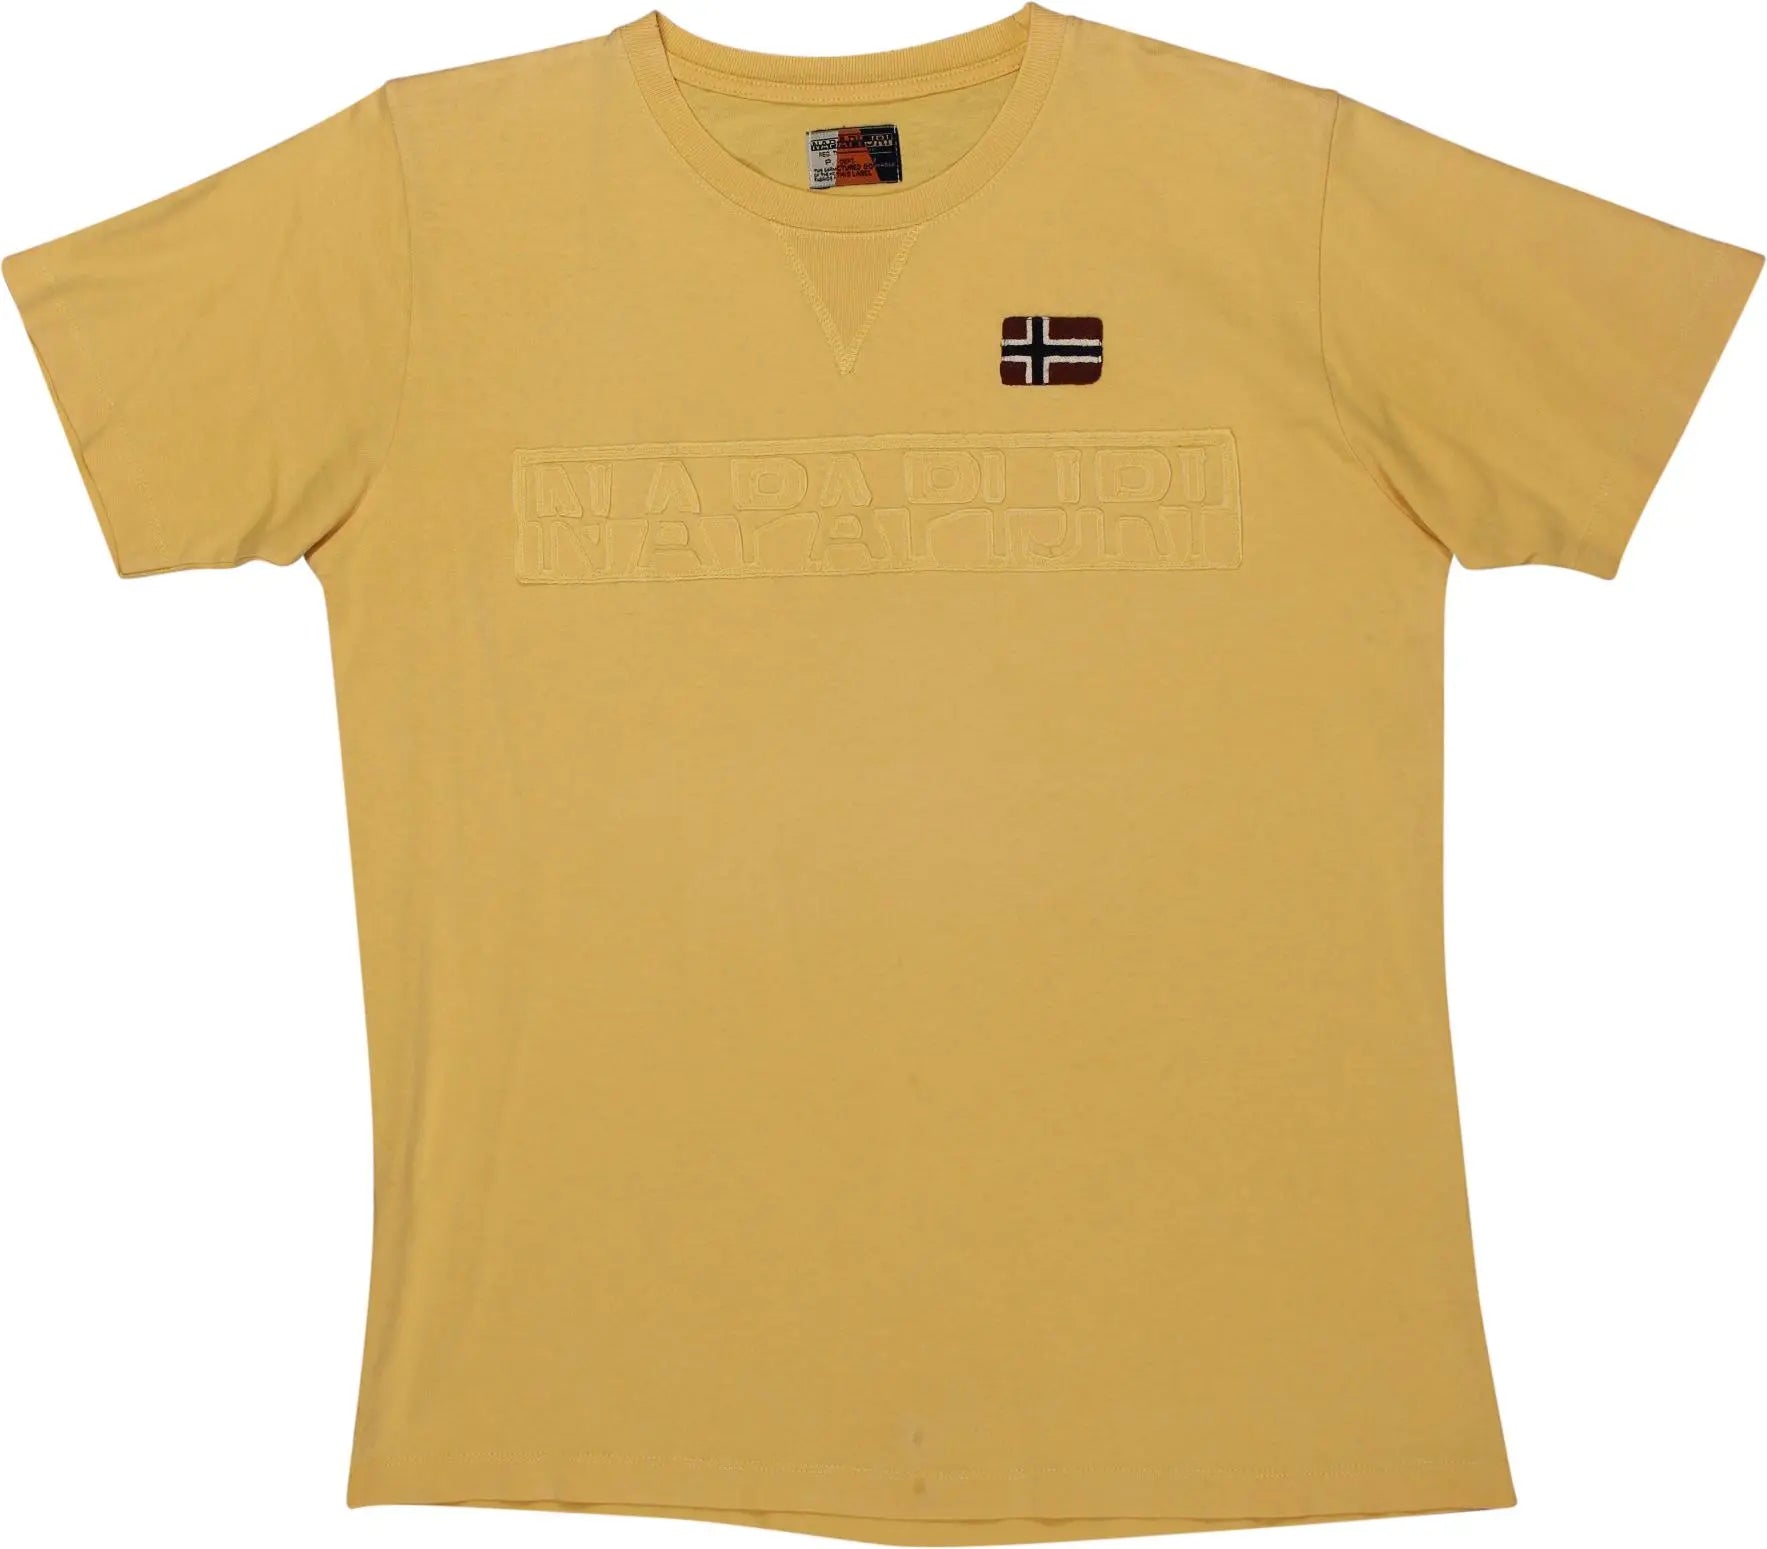 Napapijri - Yellow T-shirt by Napapijri- ThriftTale.com - Vintage and second handclothing